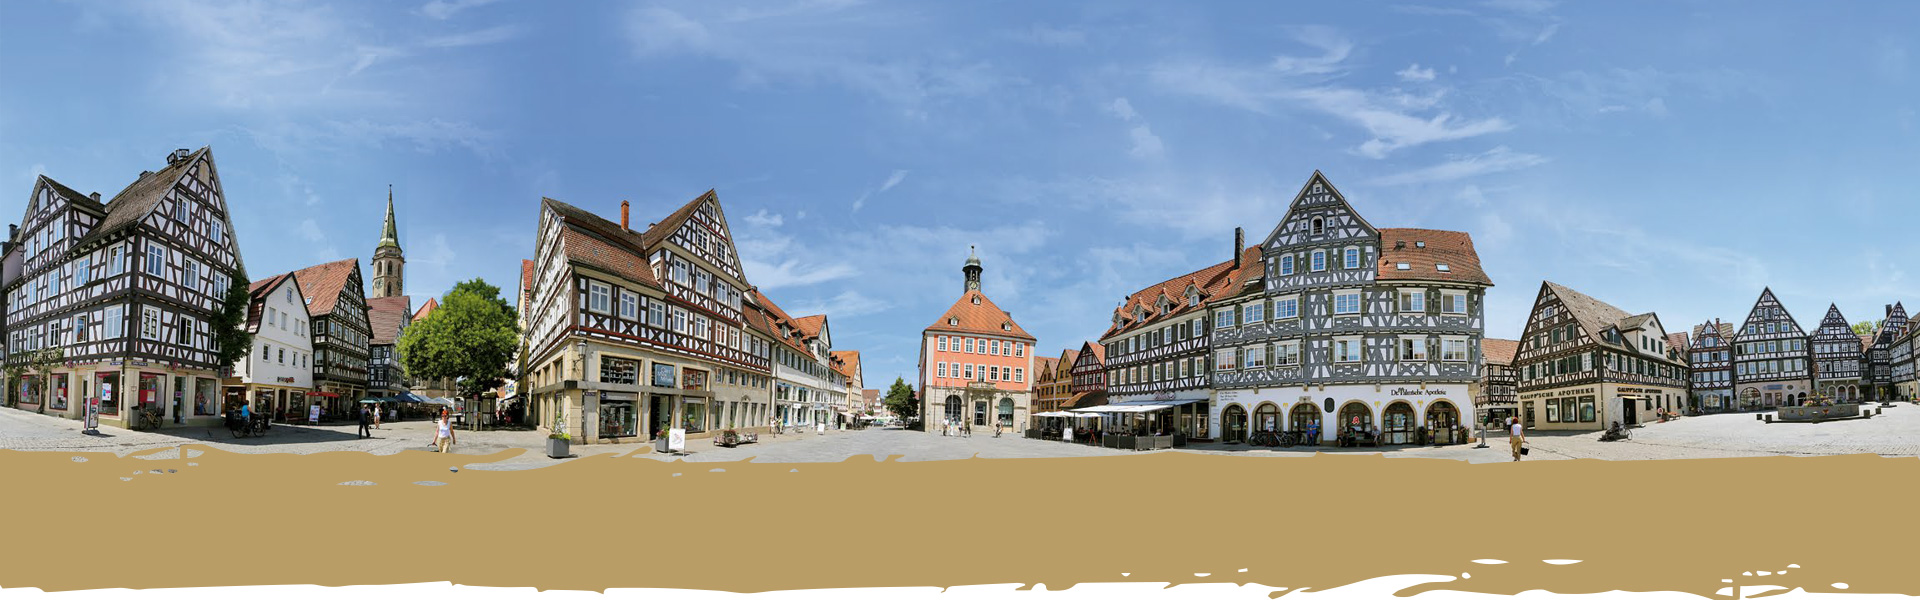 Panorama Marktplatz Schorndorf